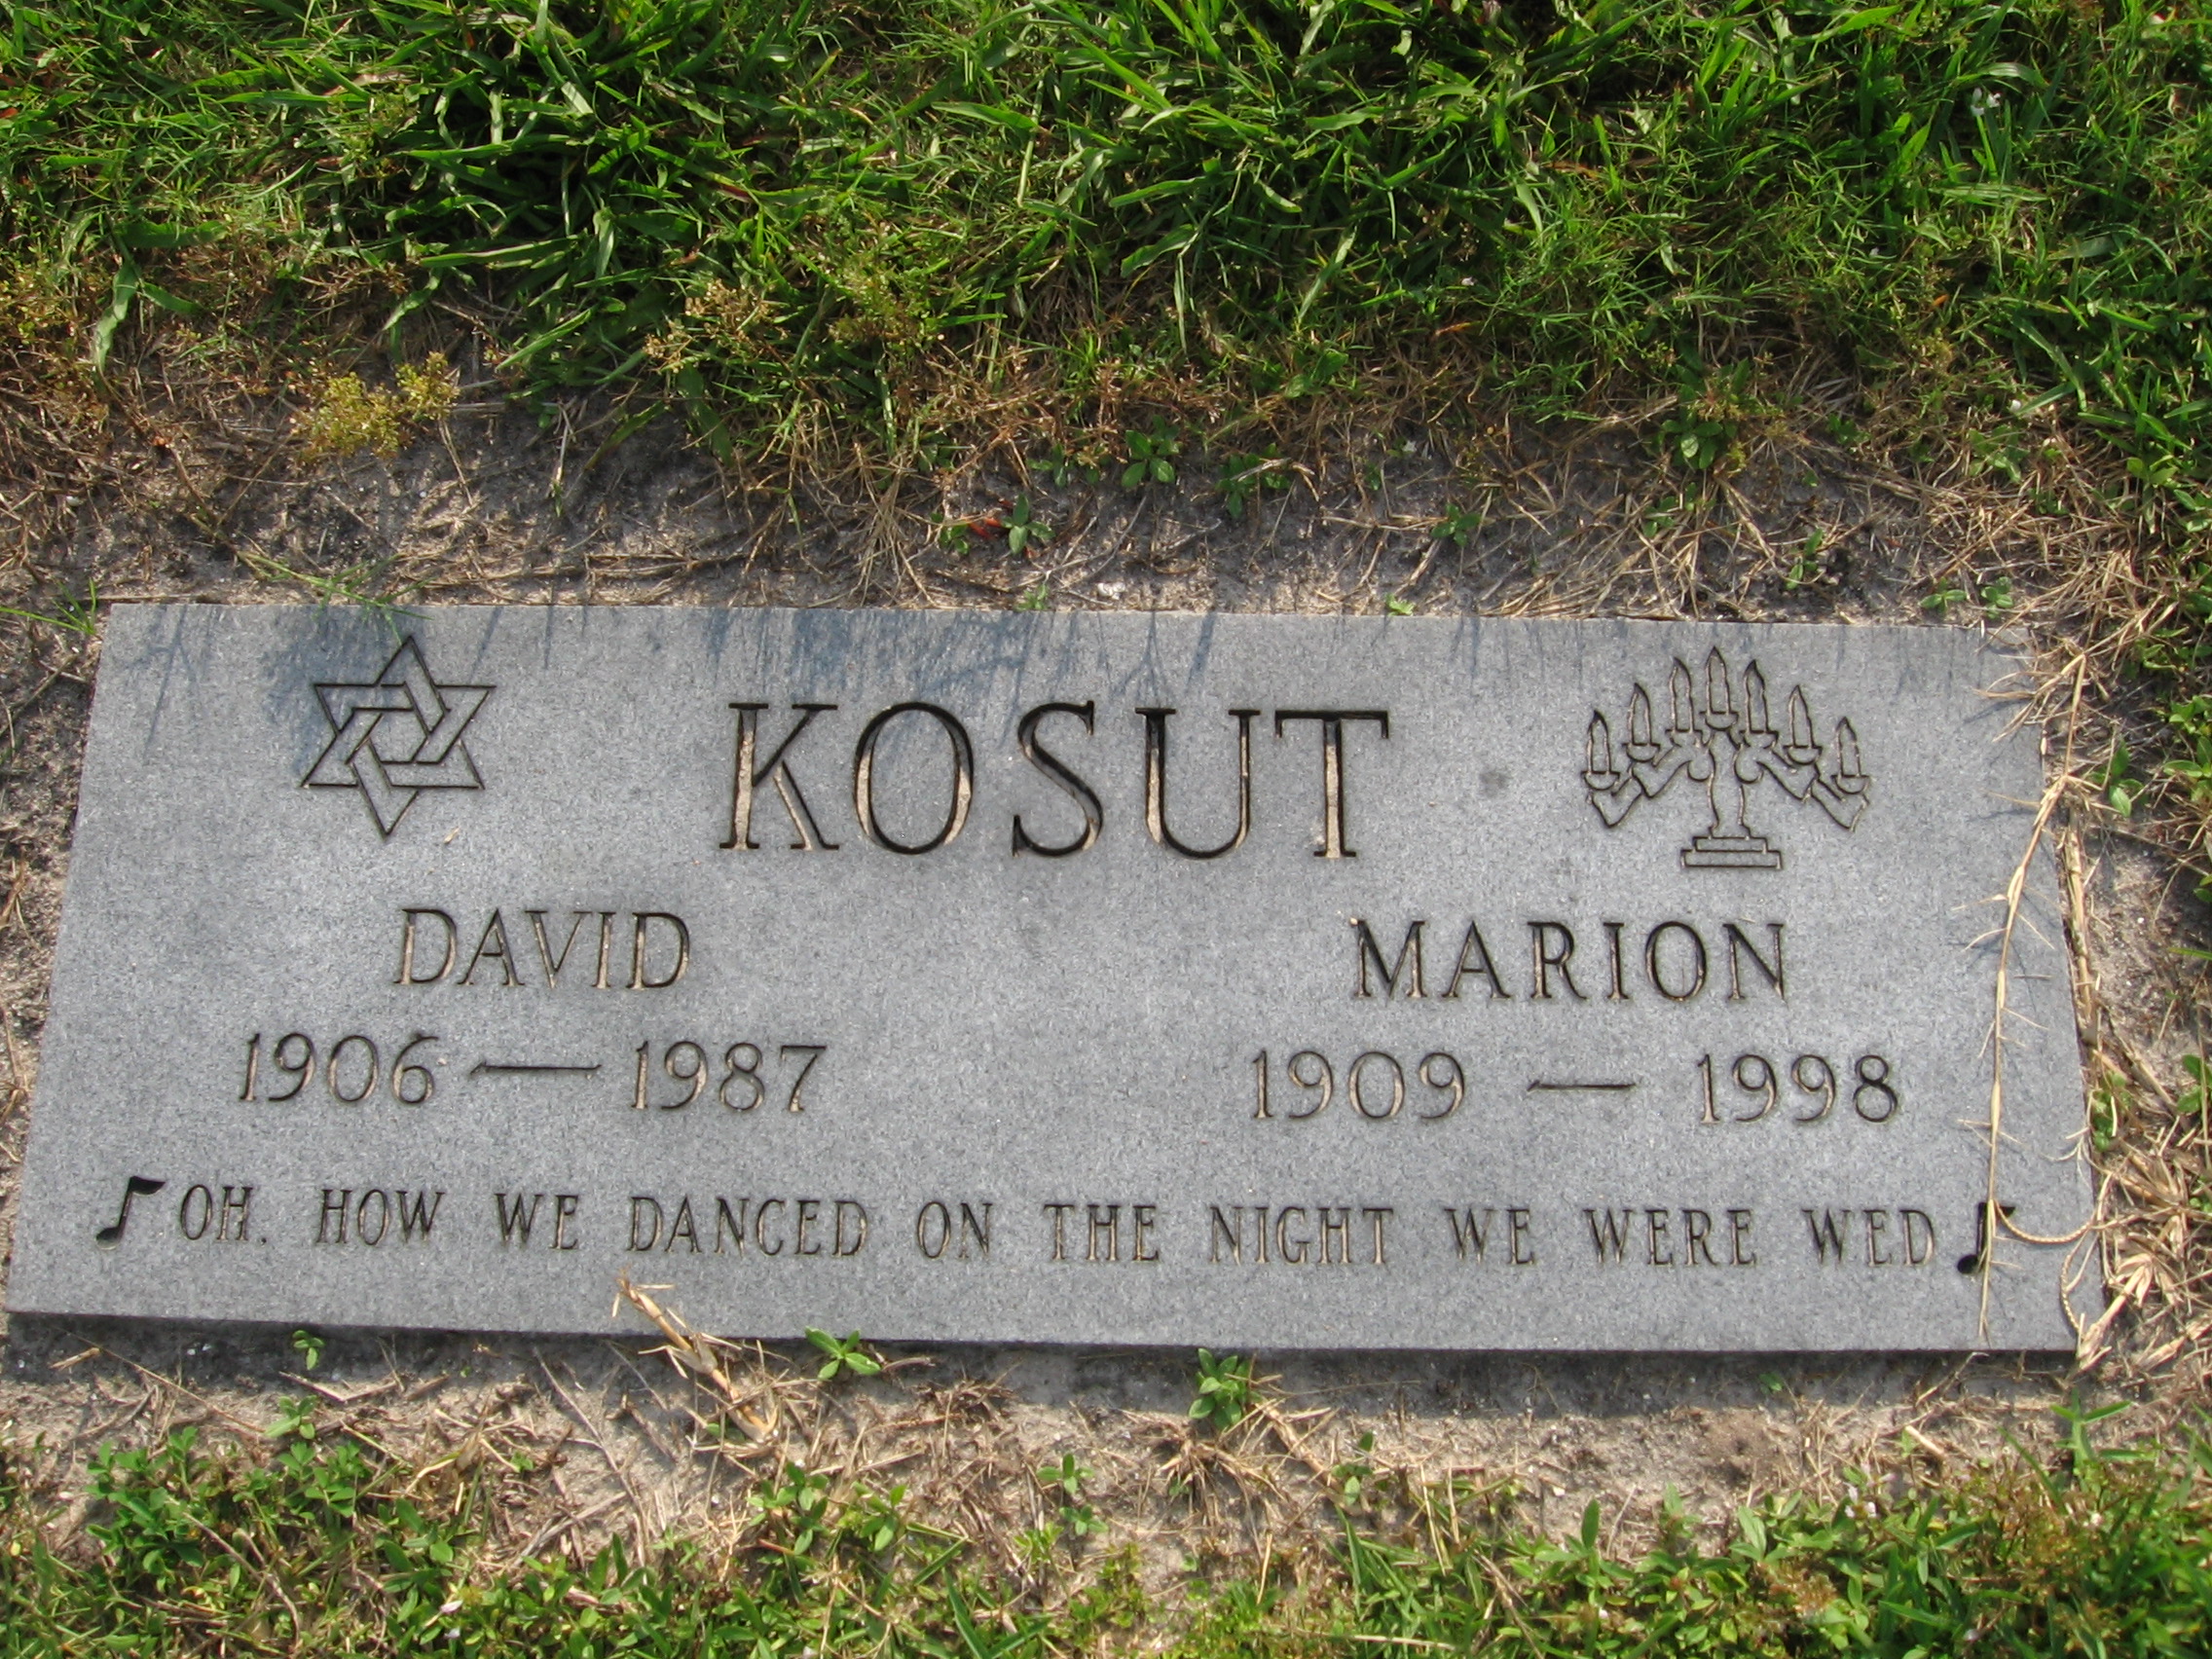 David Kosut